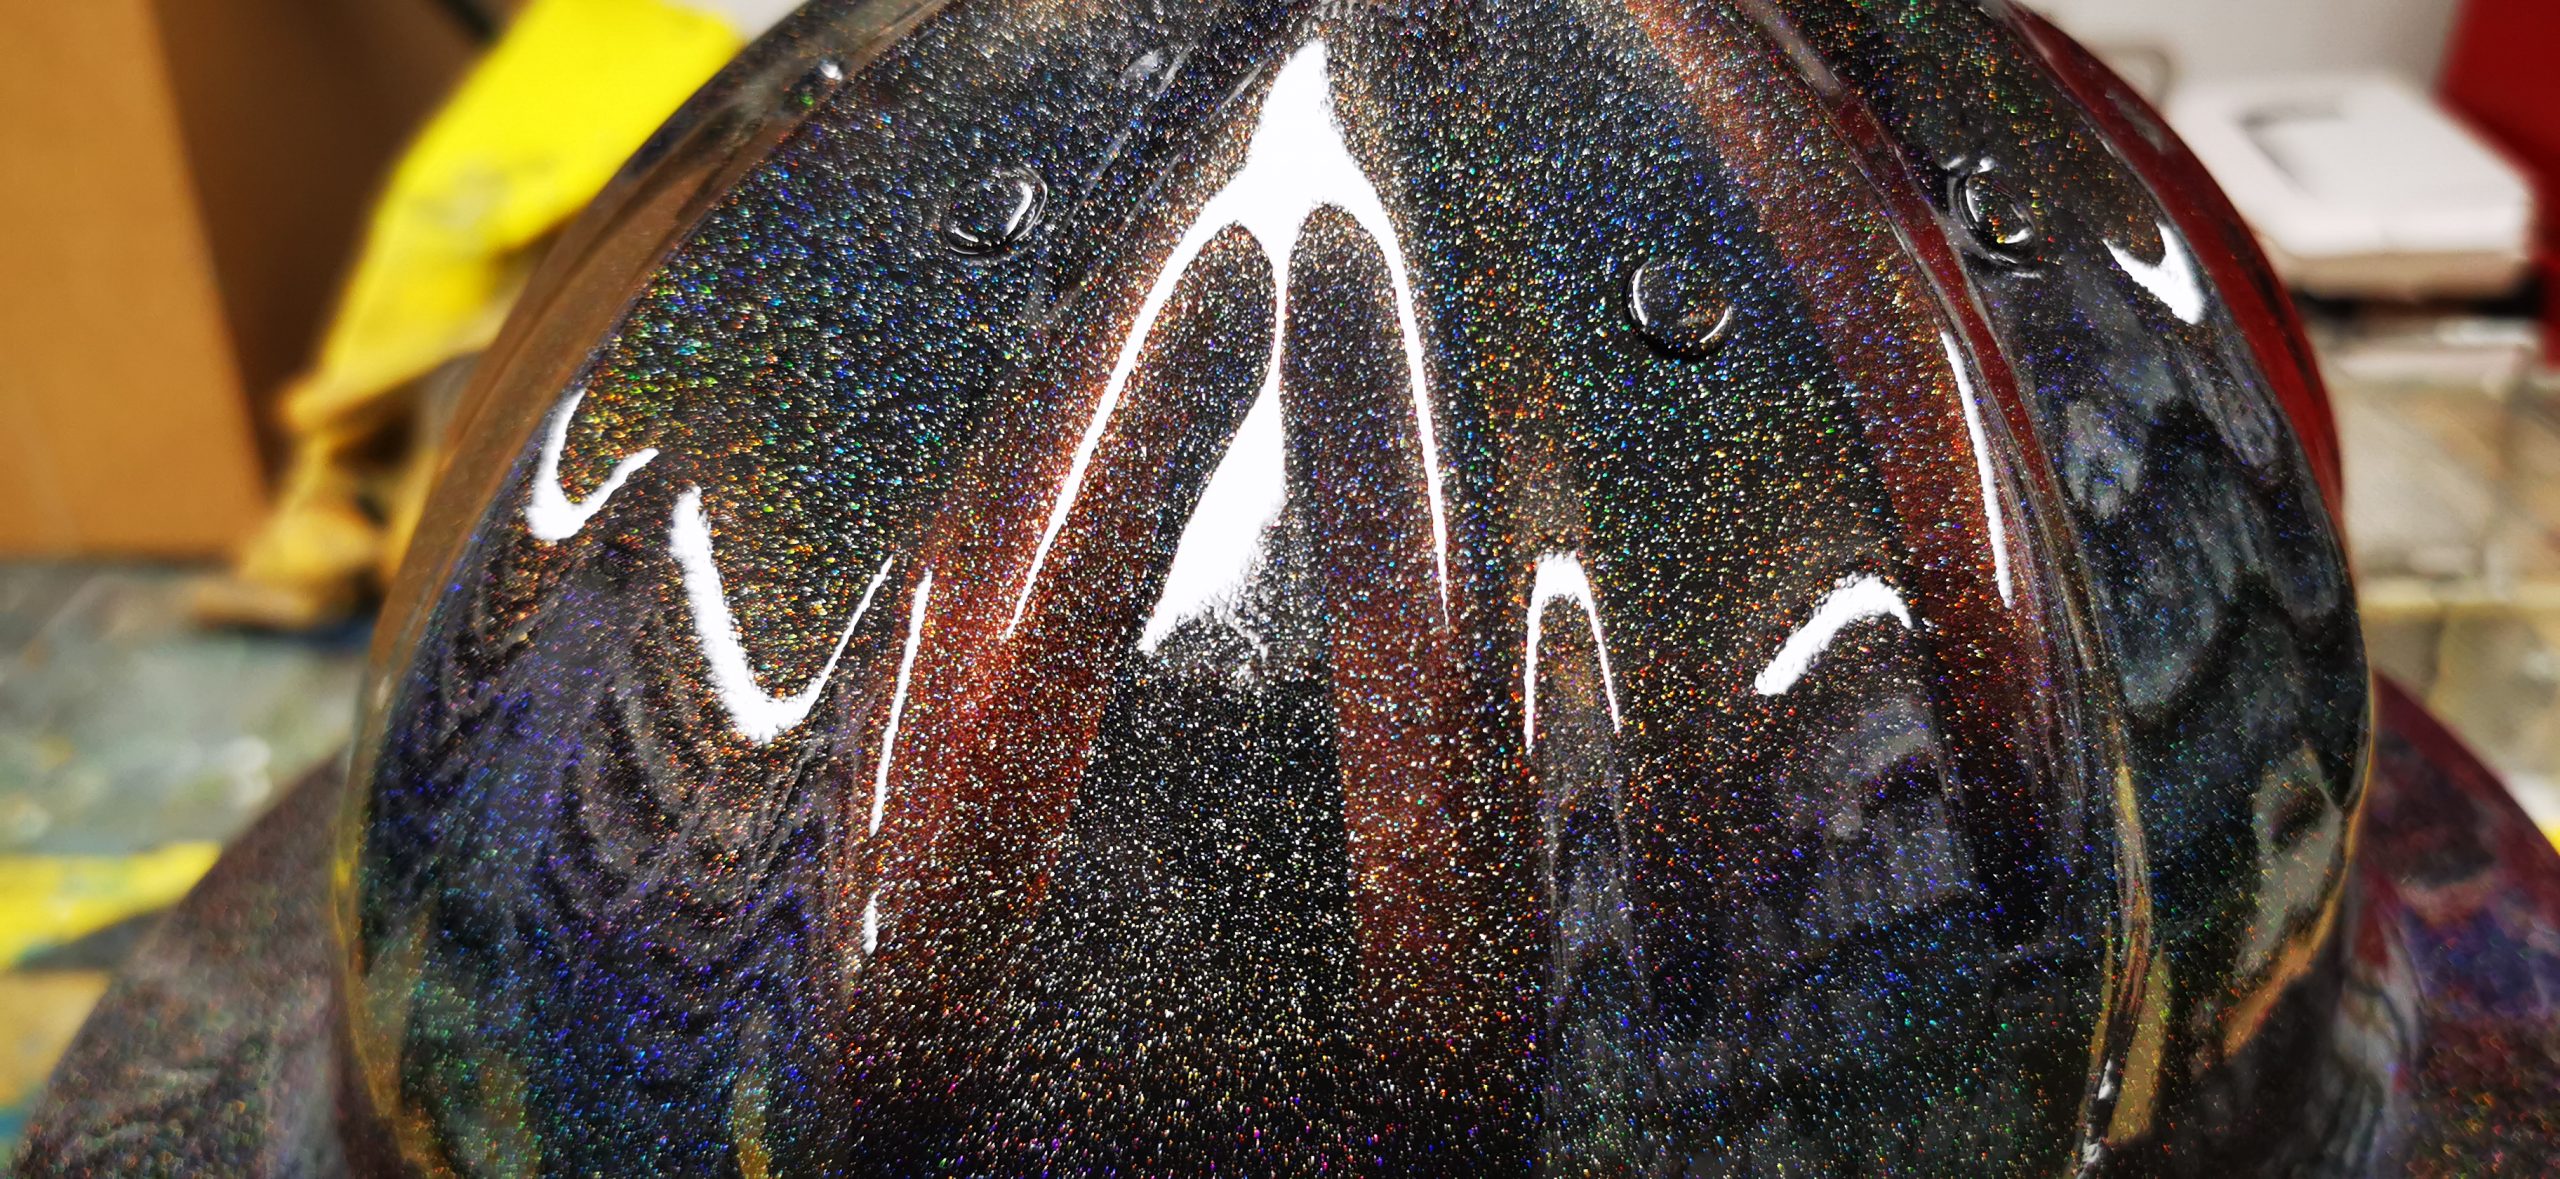 close up of hologram coating